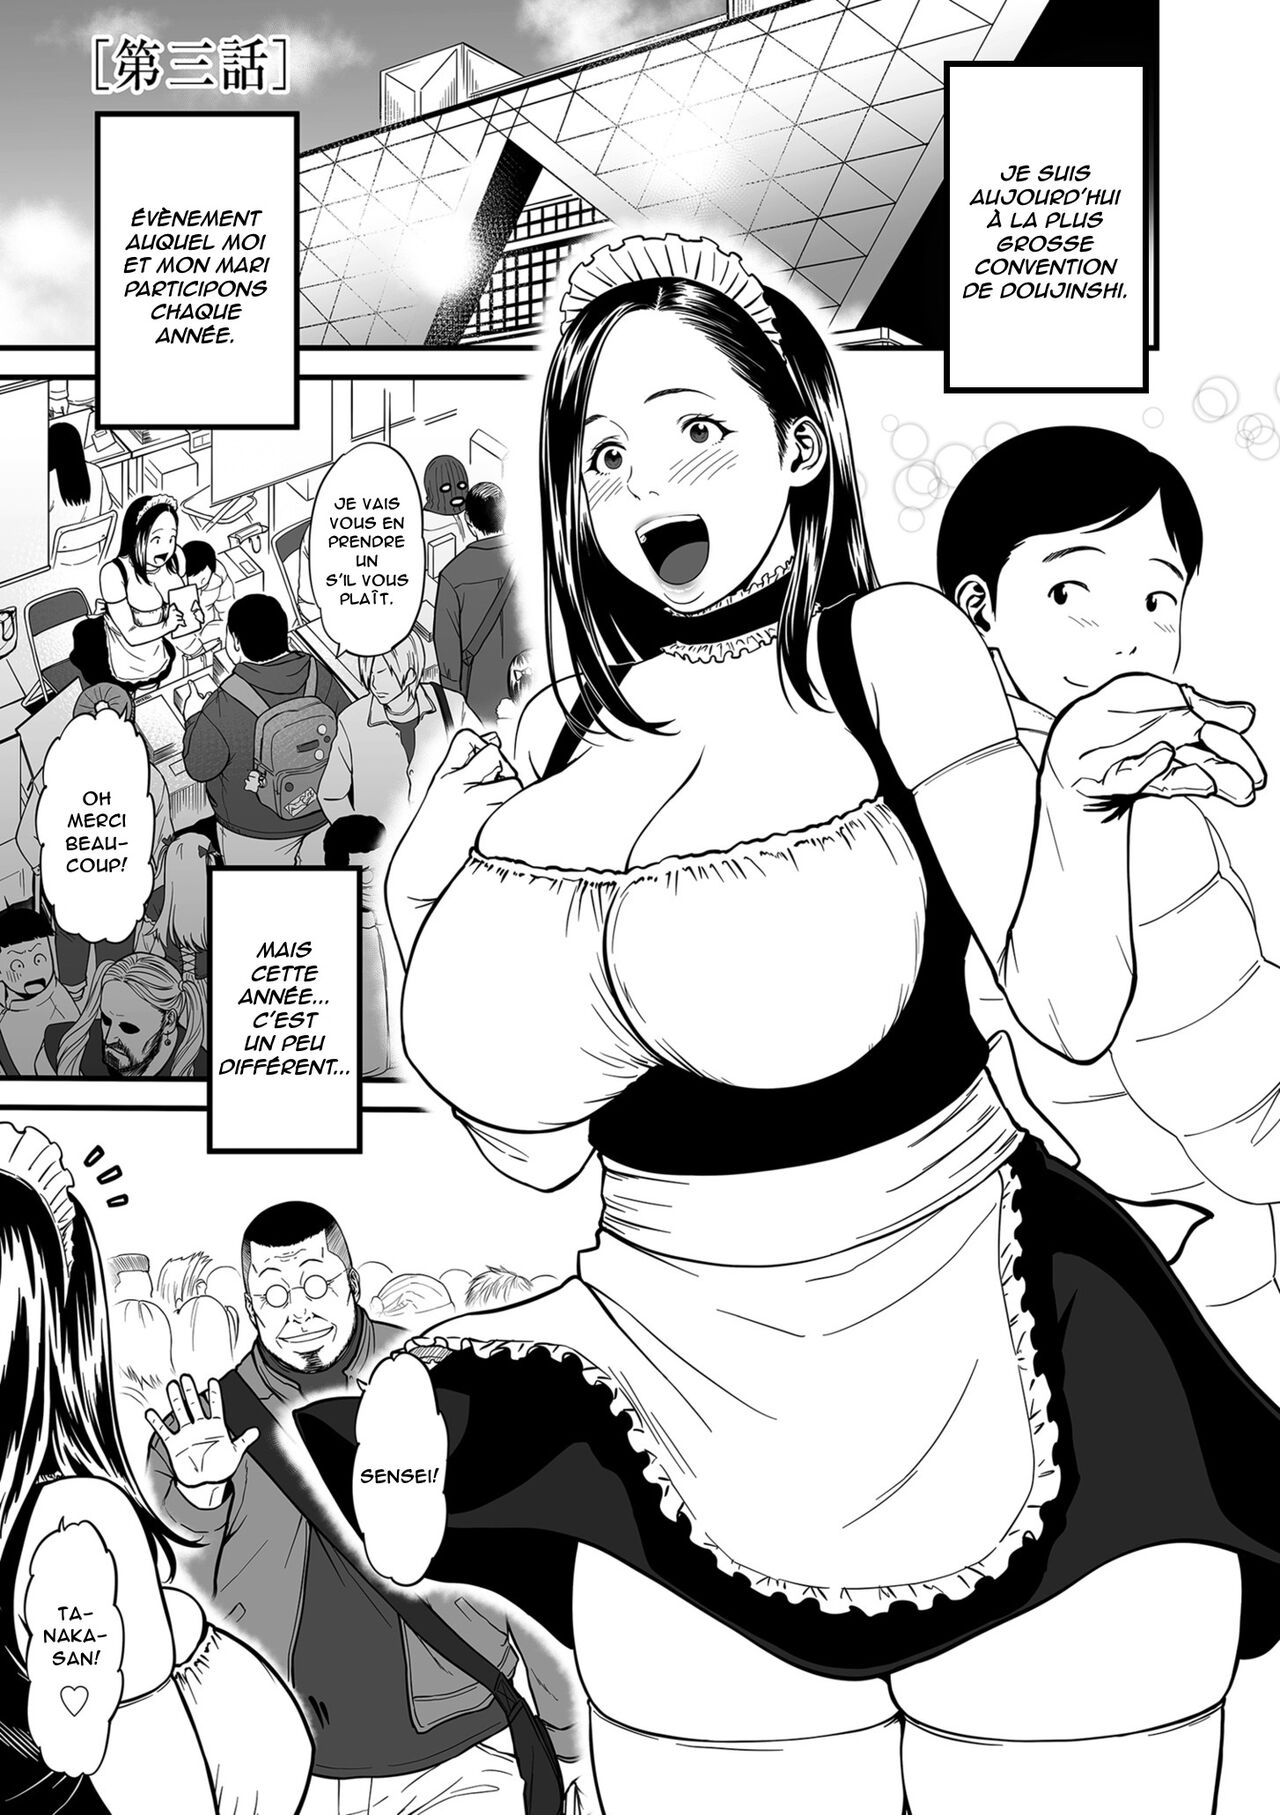 Onna Eromangaka ga Inran da nante Gensou ja nai?  Is It Not a Fantasy That The Female Erotic Mangaka Is a Pervert? numero d'image 61